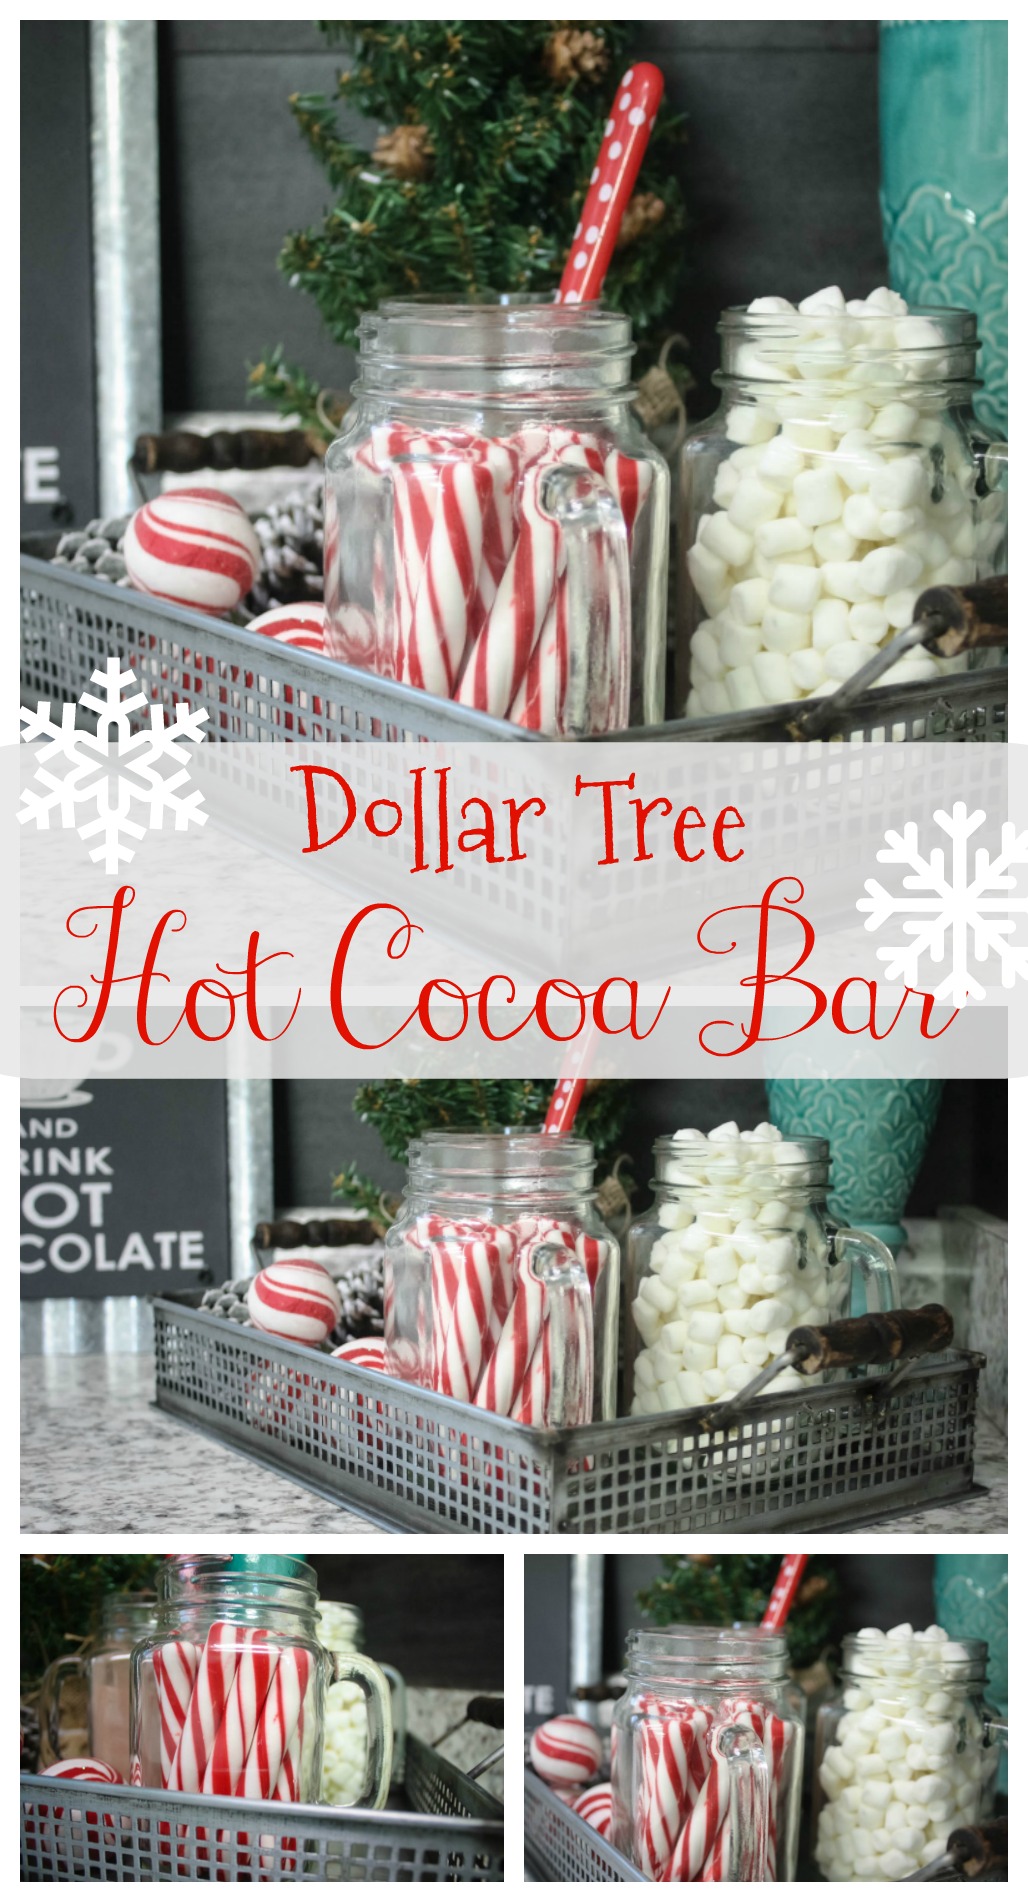 Dollar Tree Hot Cocoa Bar - Re-Fabbed